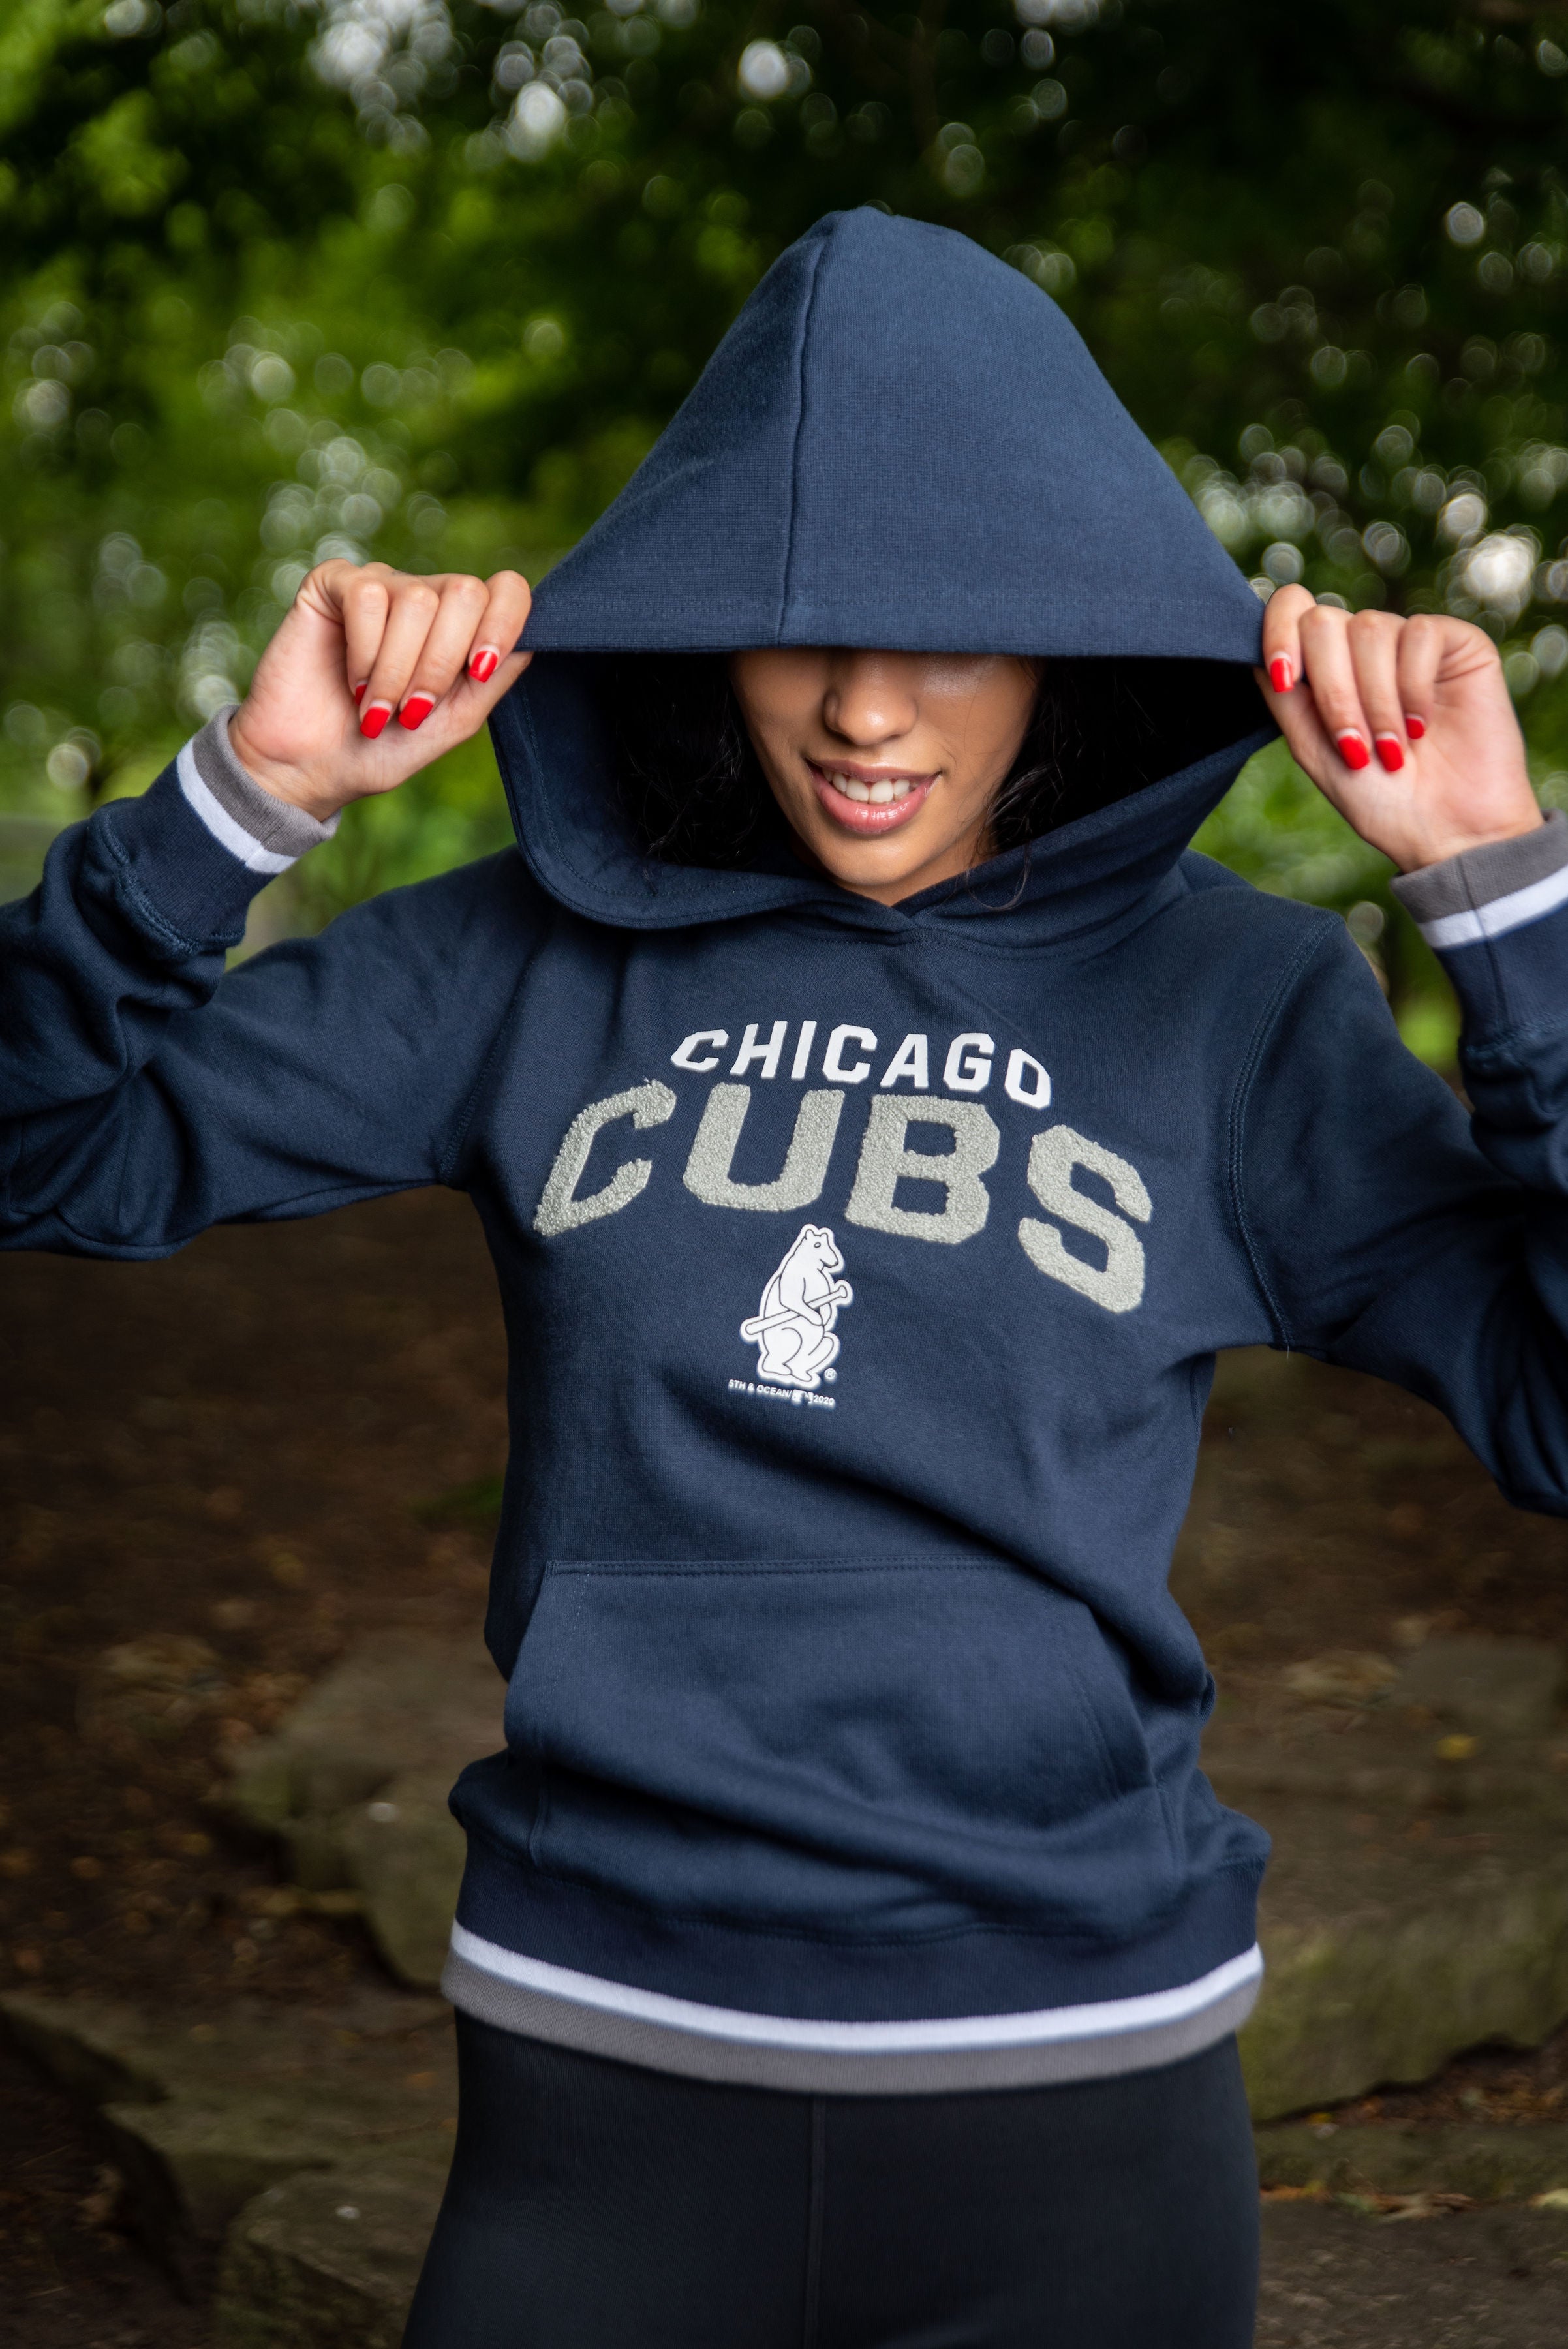 Chicago Cubs Navy Blue Genuine Merchandise Hooded Sweatshirt. Size L